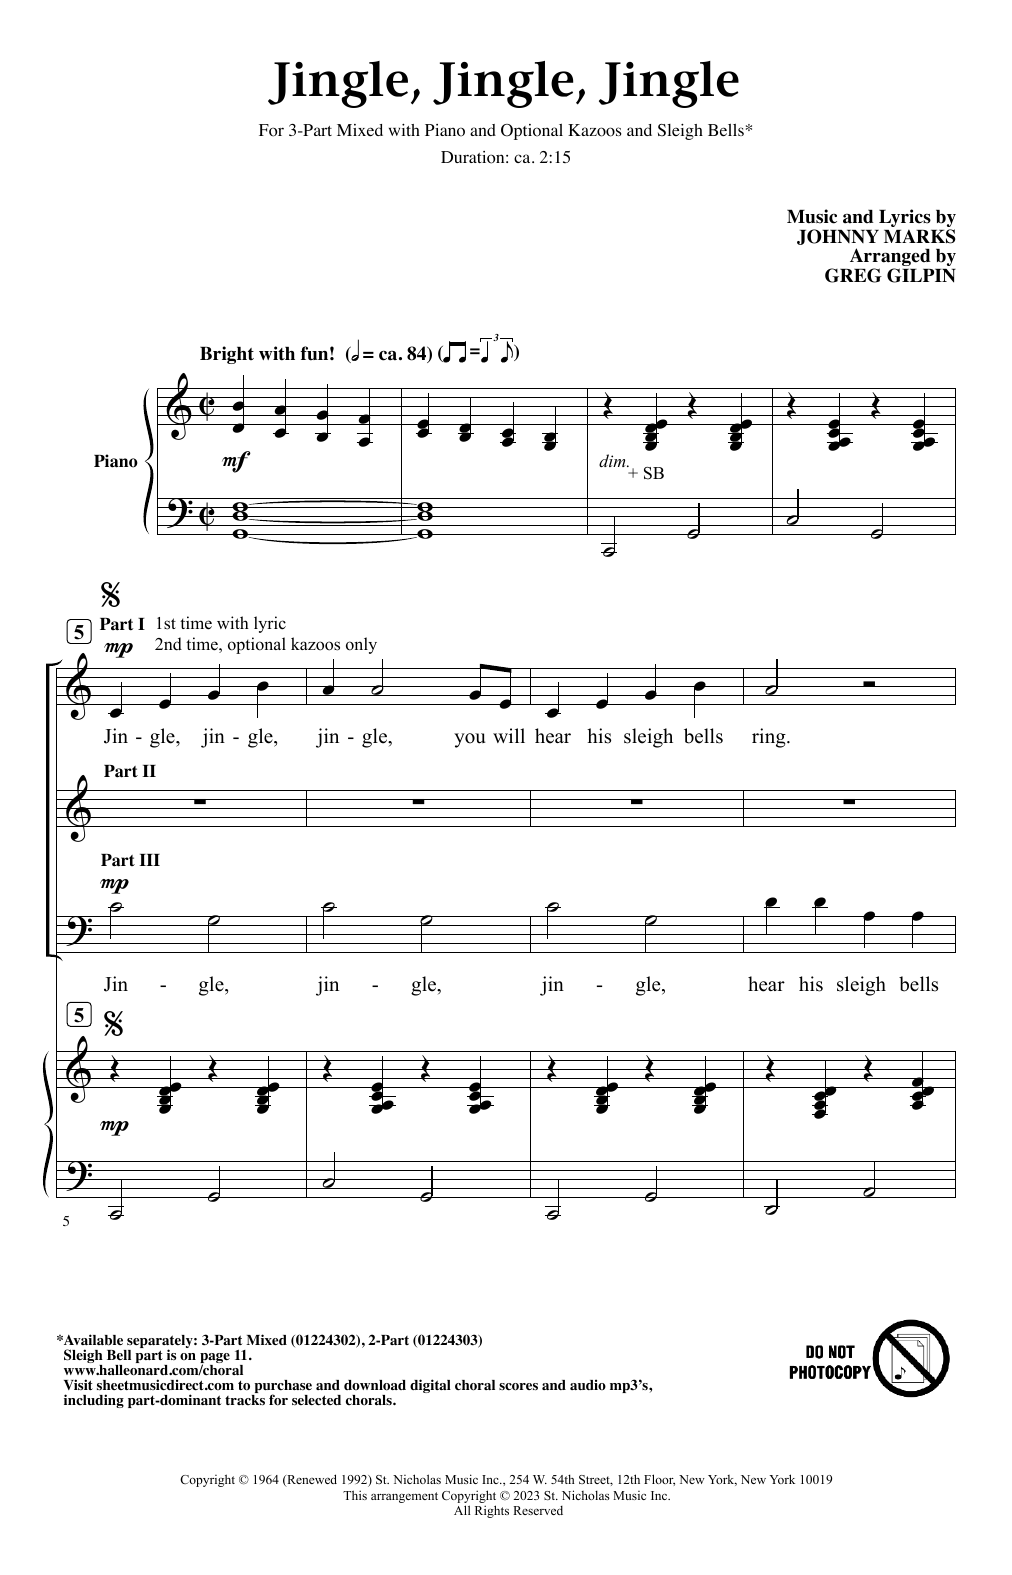 Johnny Marks Jingle, Jingle, Jingle (arr. Greg Gilpin) Sheet Music Notes & Chords for 2-Part Choir - Download or Print PDF